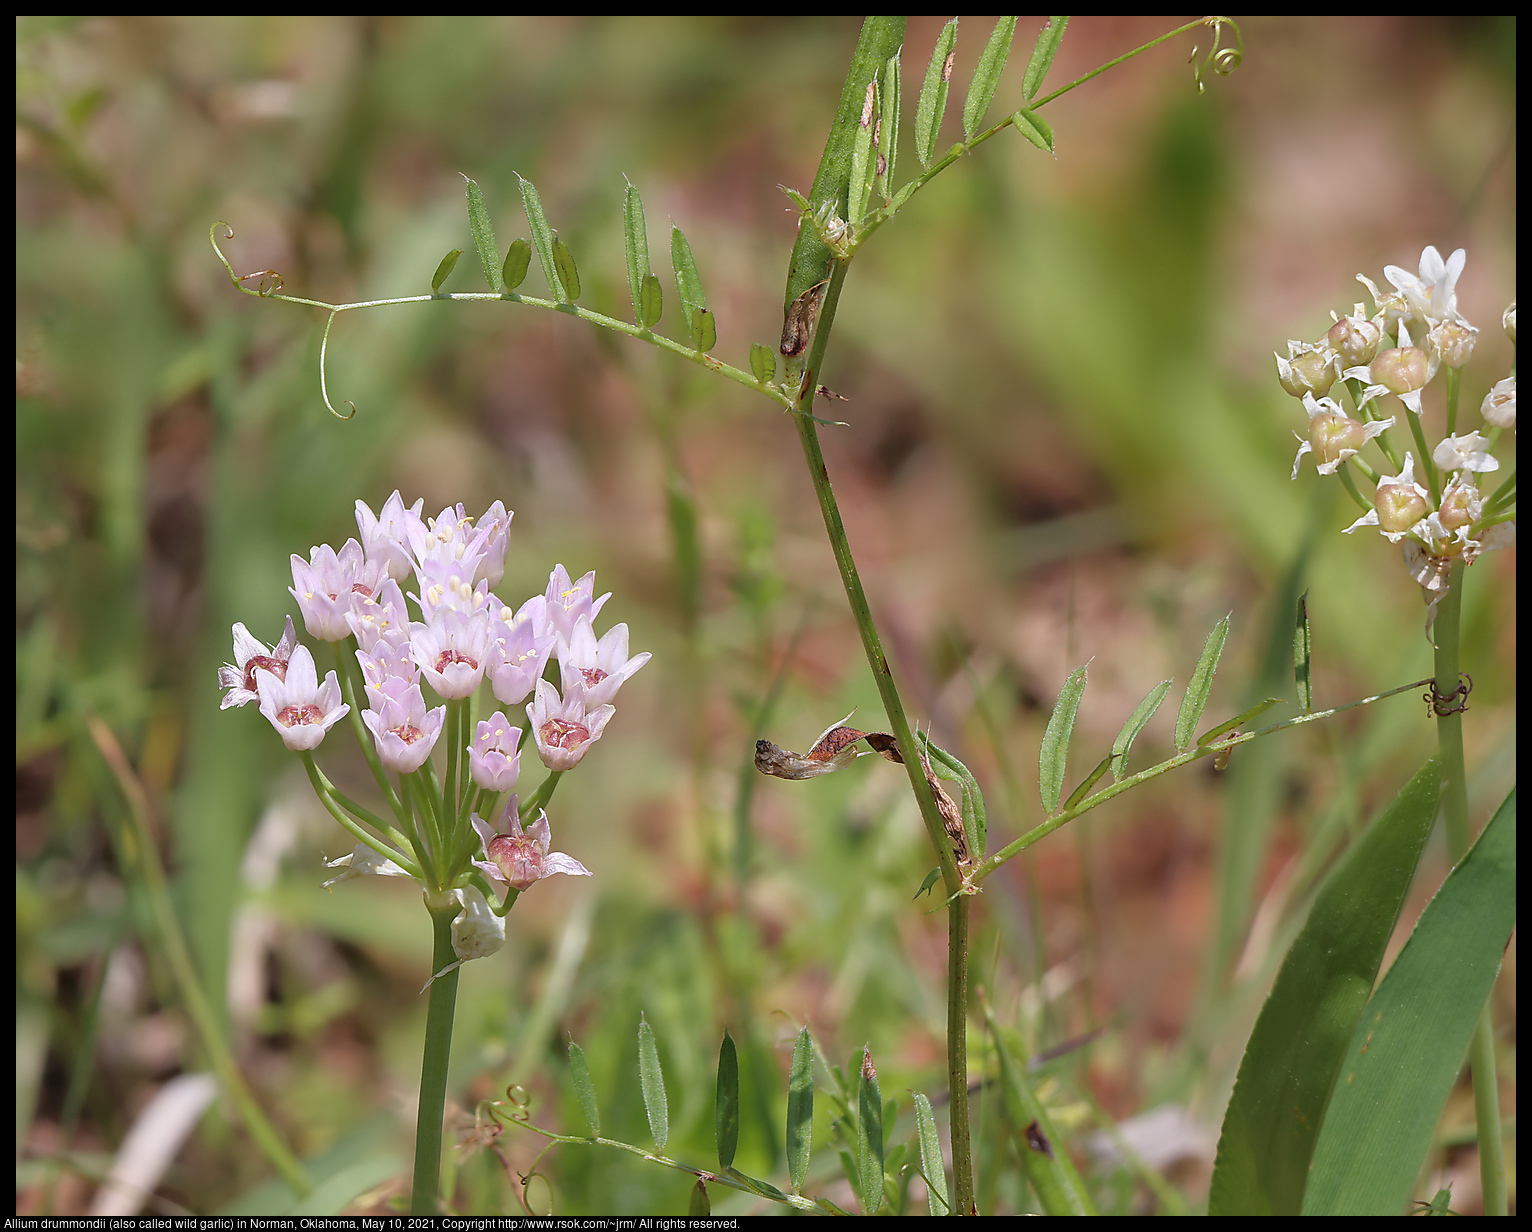 Allium drummondii (also called wild garlic) in Norman, Oklahoma, May 10, 2021